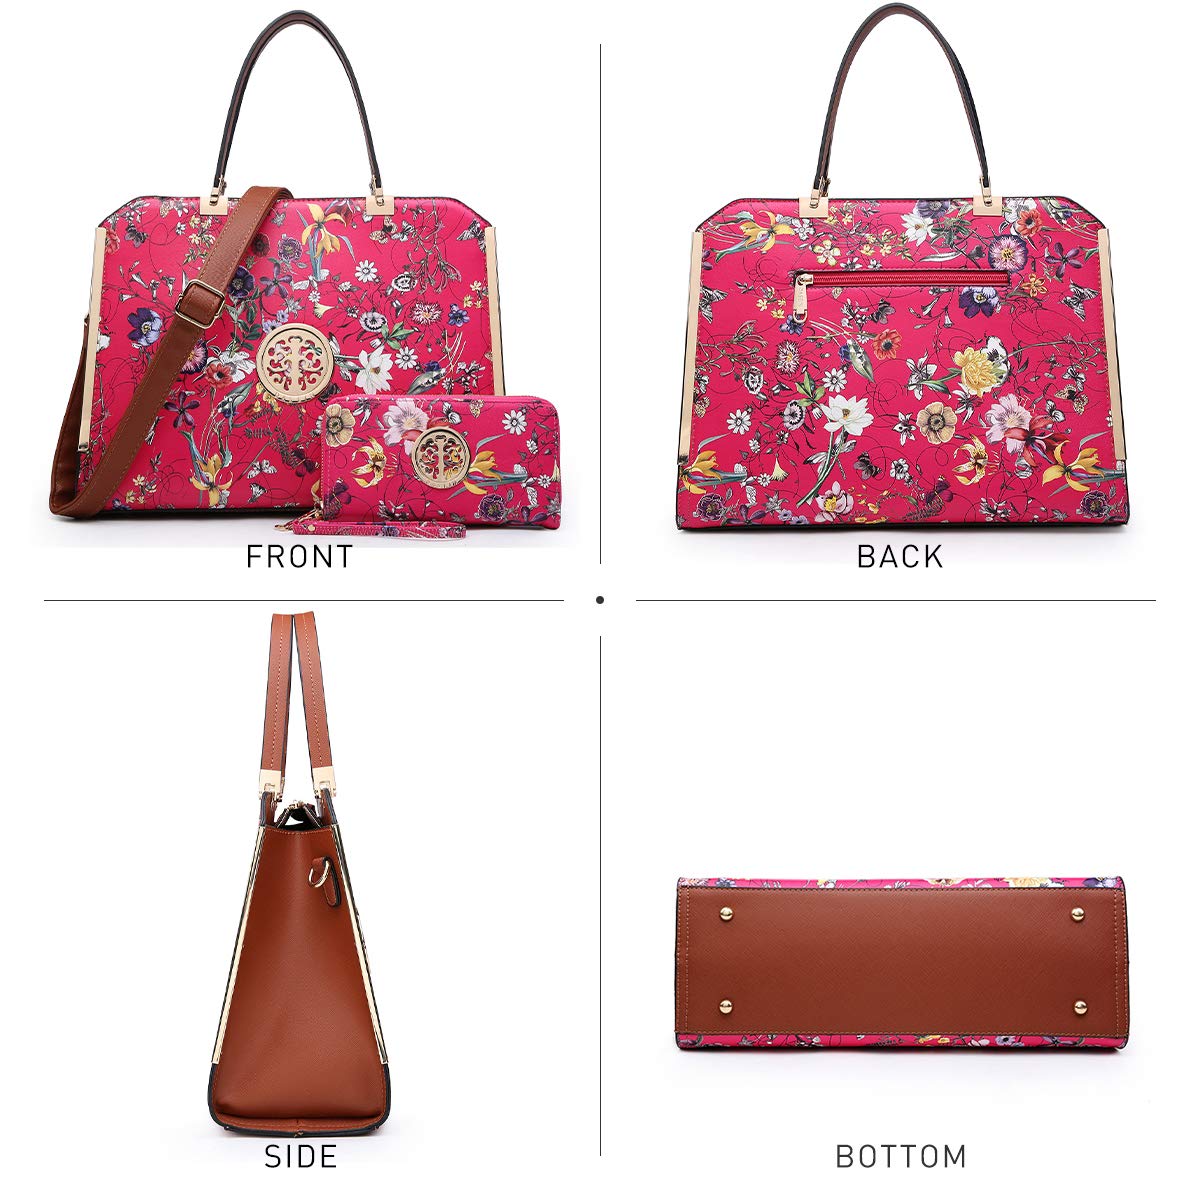 Dasein Women Purses and Handbags Top Handle Satchel Bags Large Shoulder Work Bag Tote with Wallet